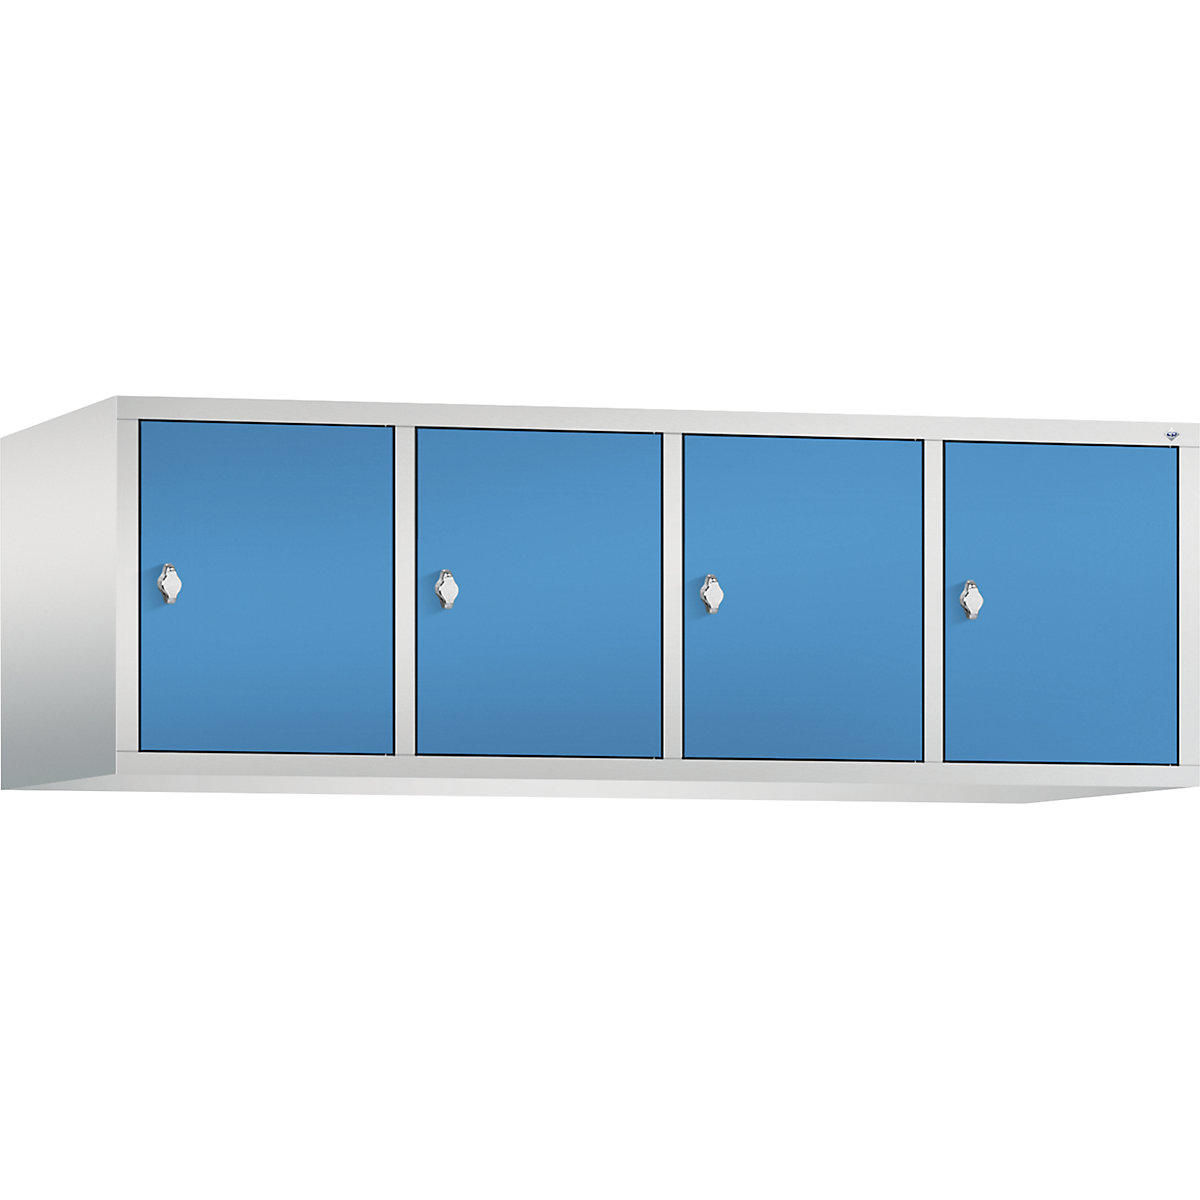 C+P – Altillo CLASSIC, 4 compartimentos, anchura de compartimento 400 mm, gris luminoso / azul luminoso